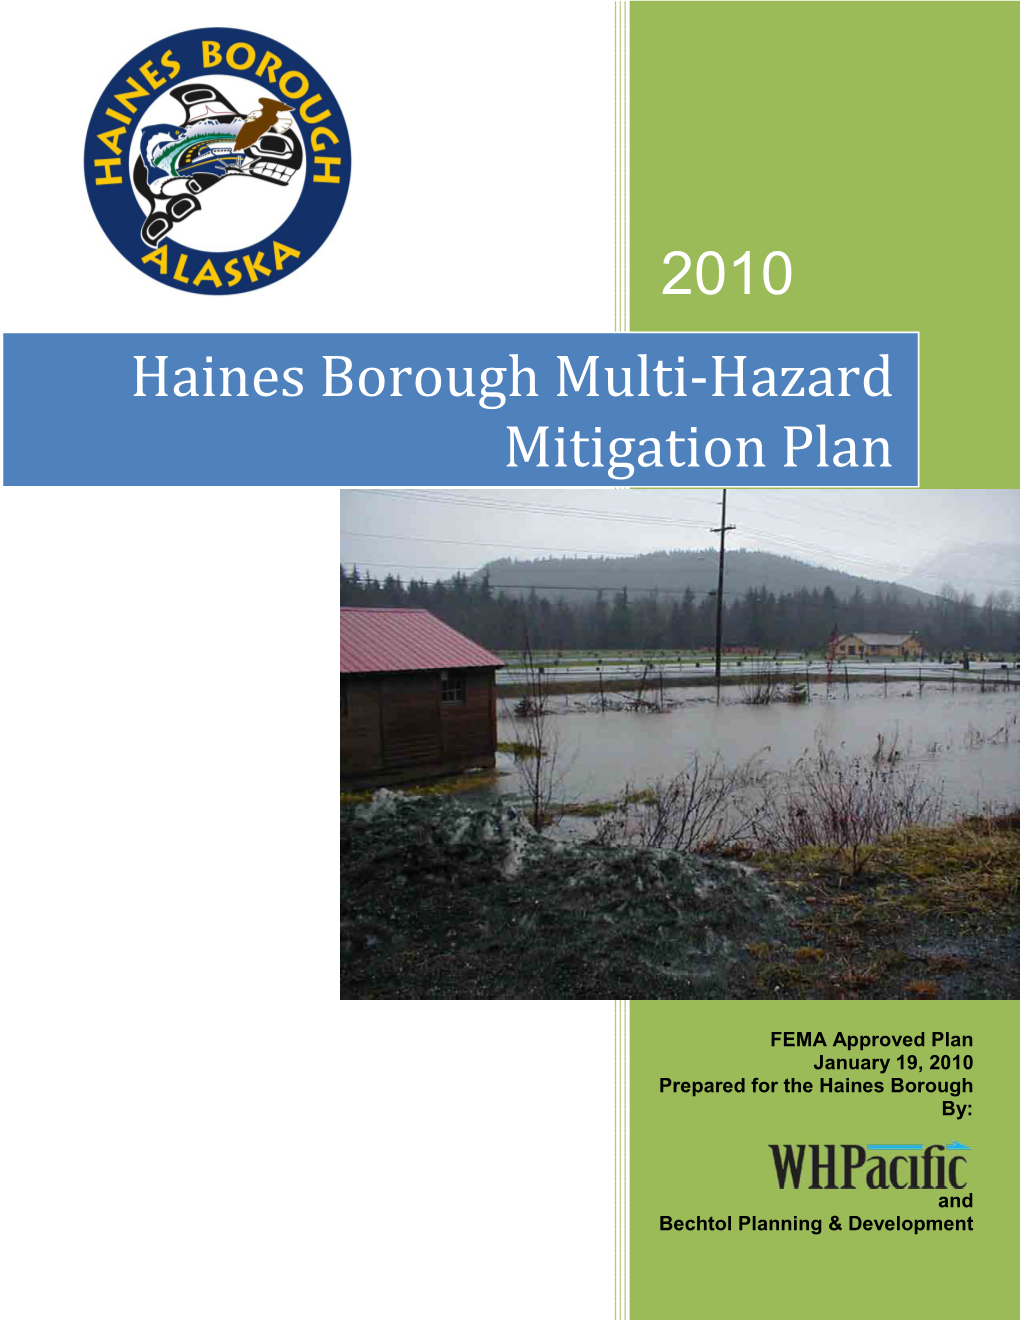 Haines Borough Multi-Hazard Mitigation Plan 2010